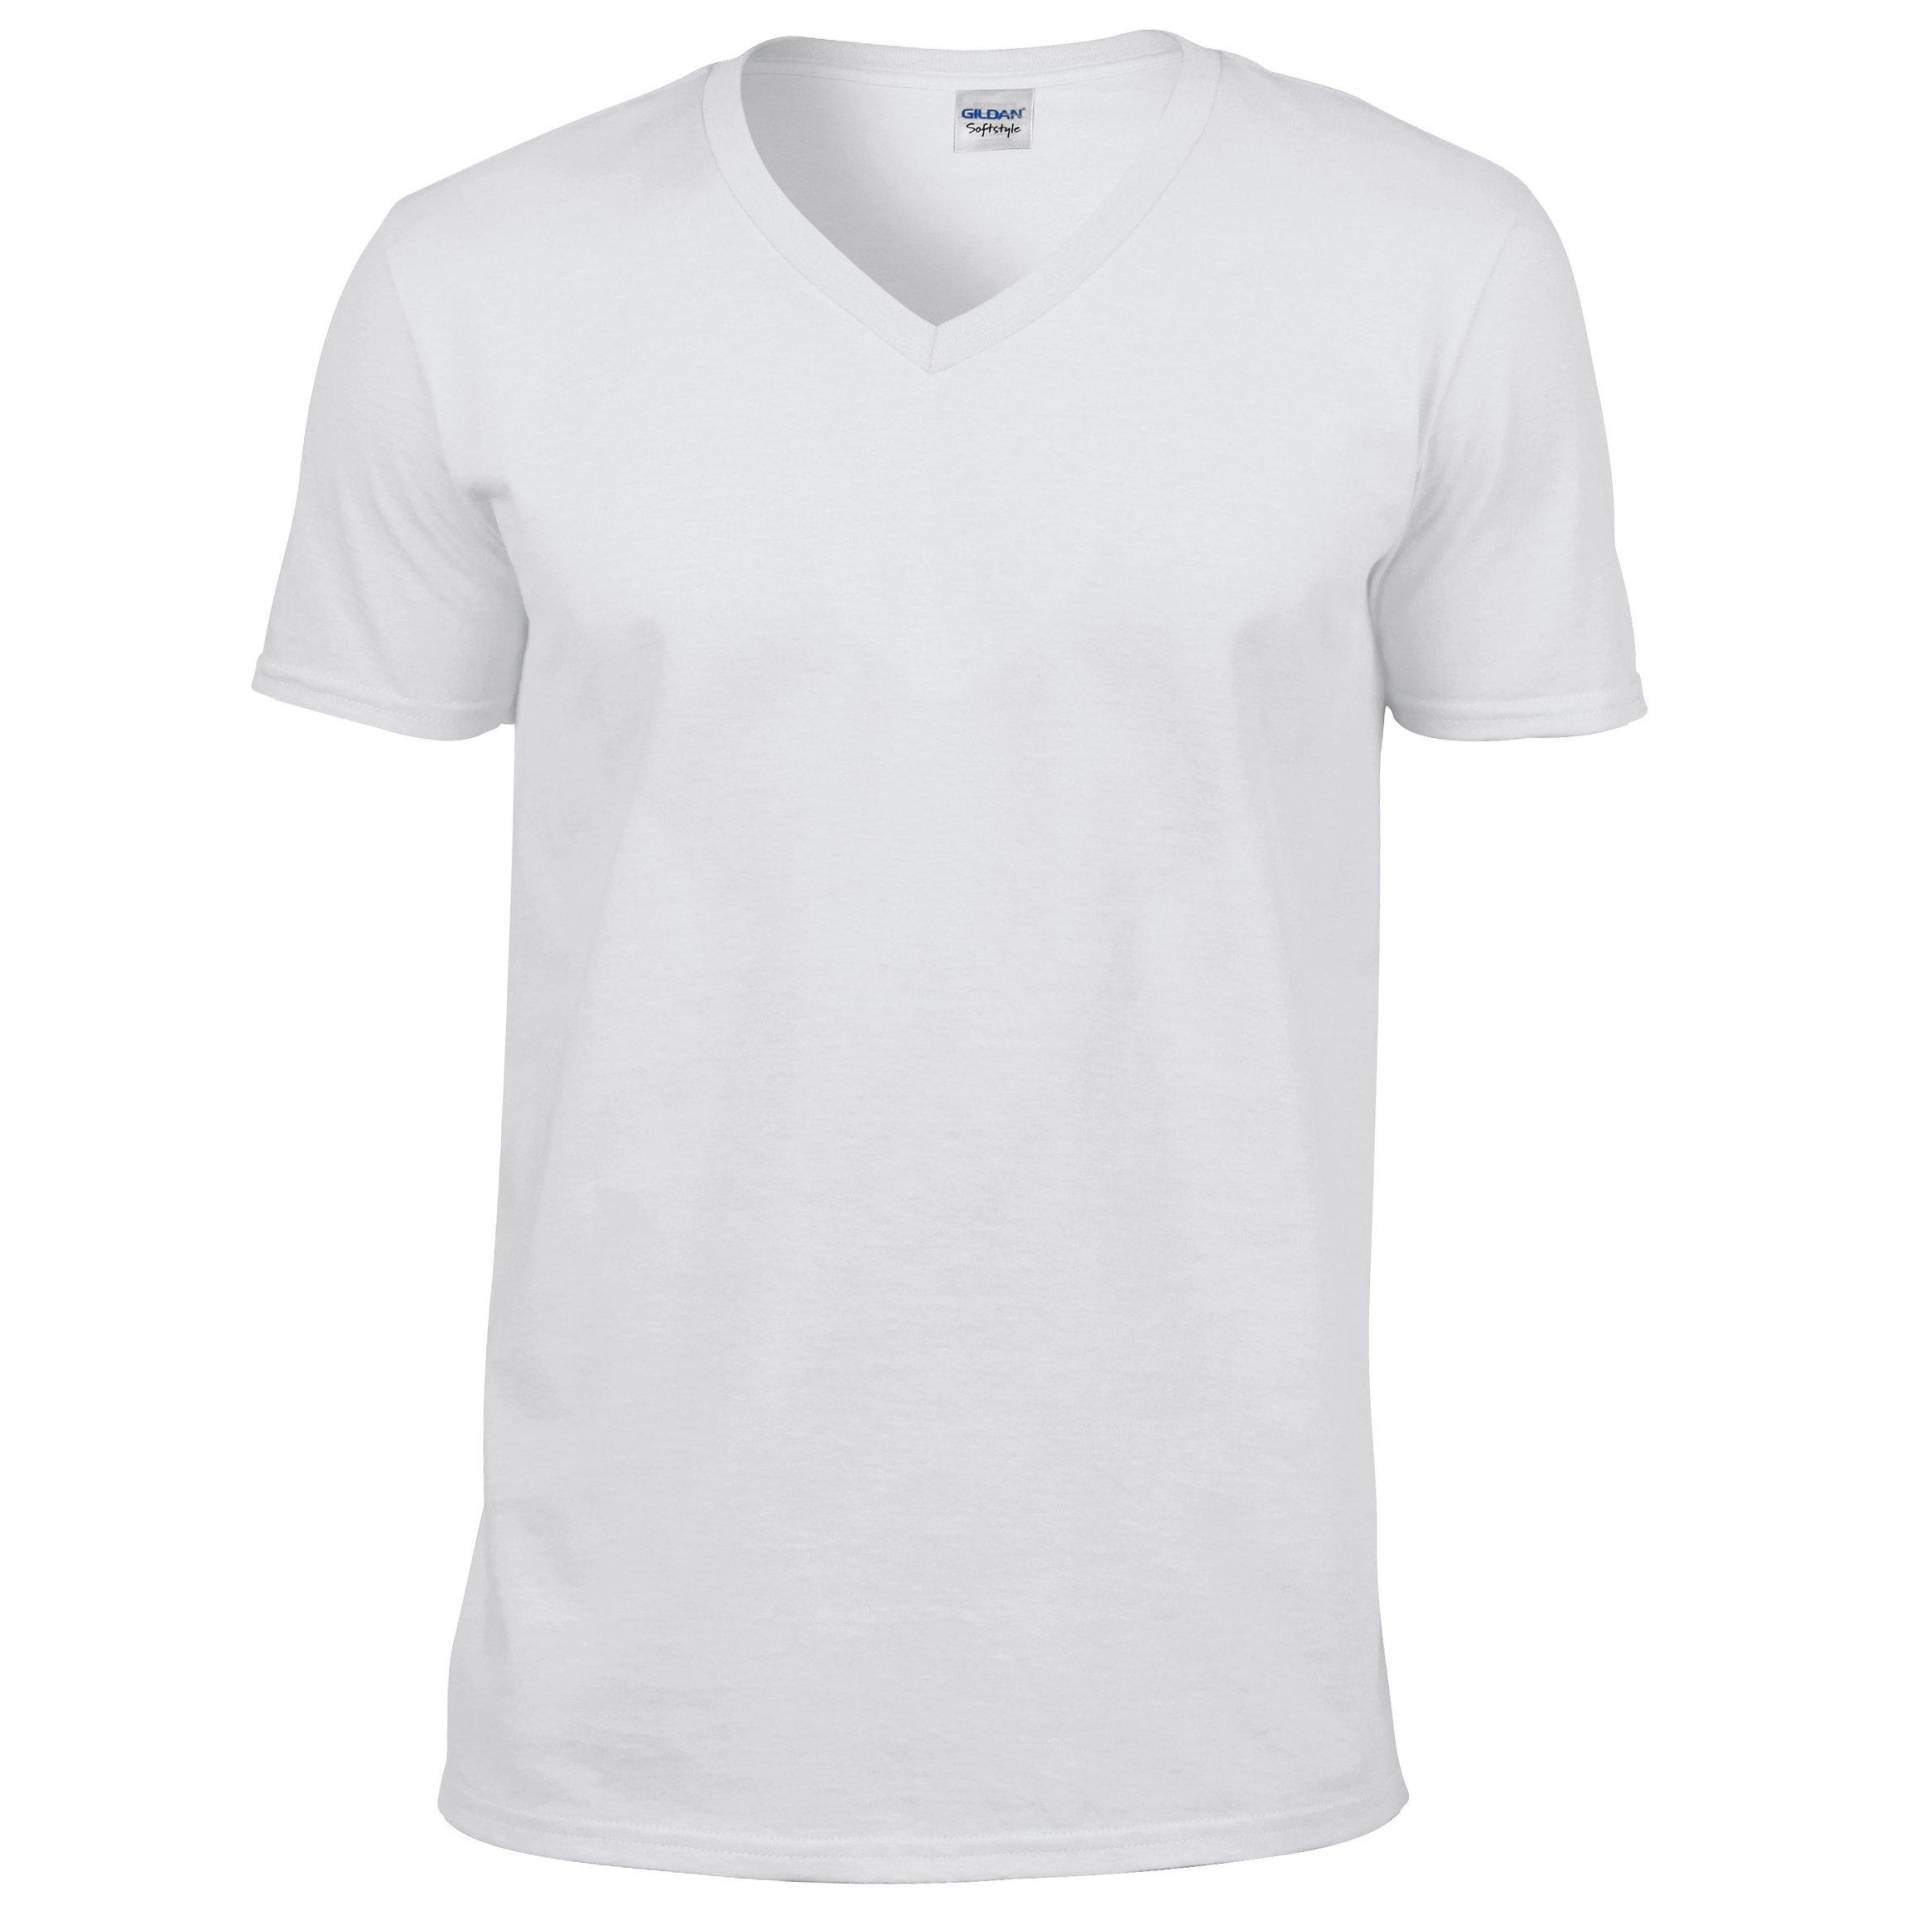 Soft Style Tshirt, Vausschnitt, Kurzarm Herren Weiss S von Gildan